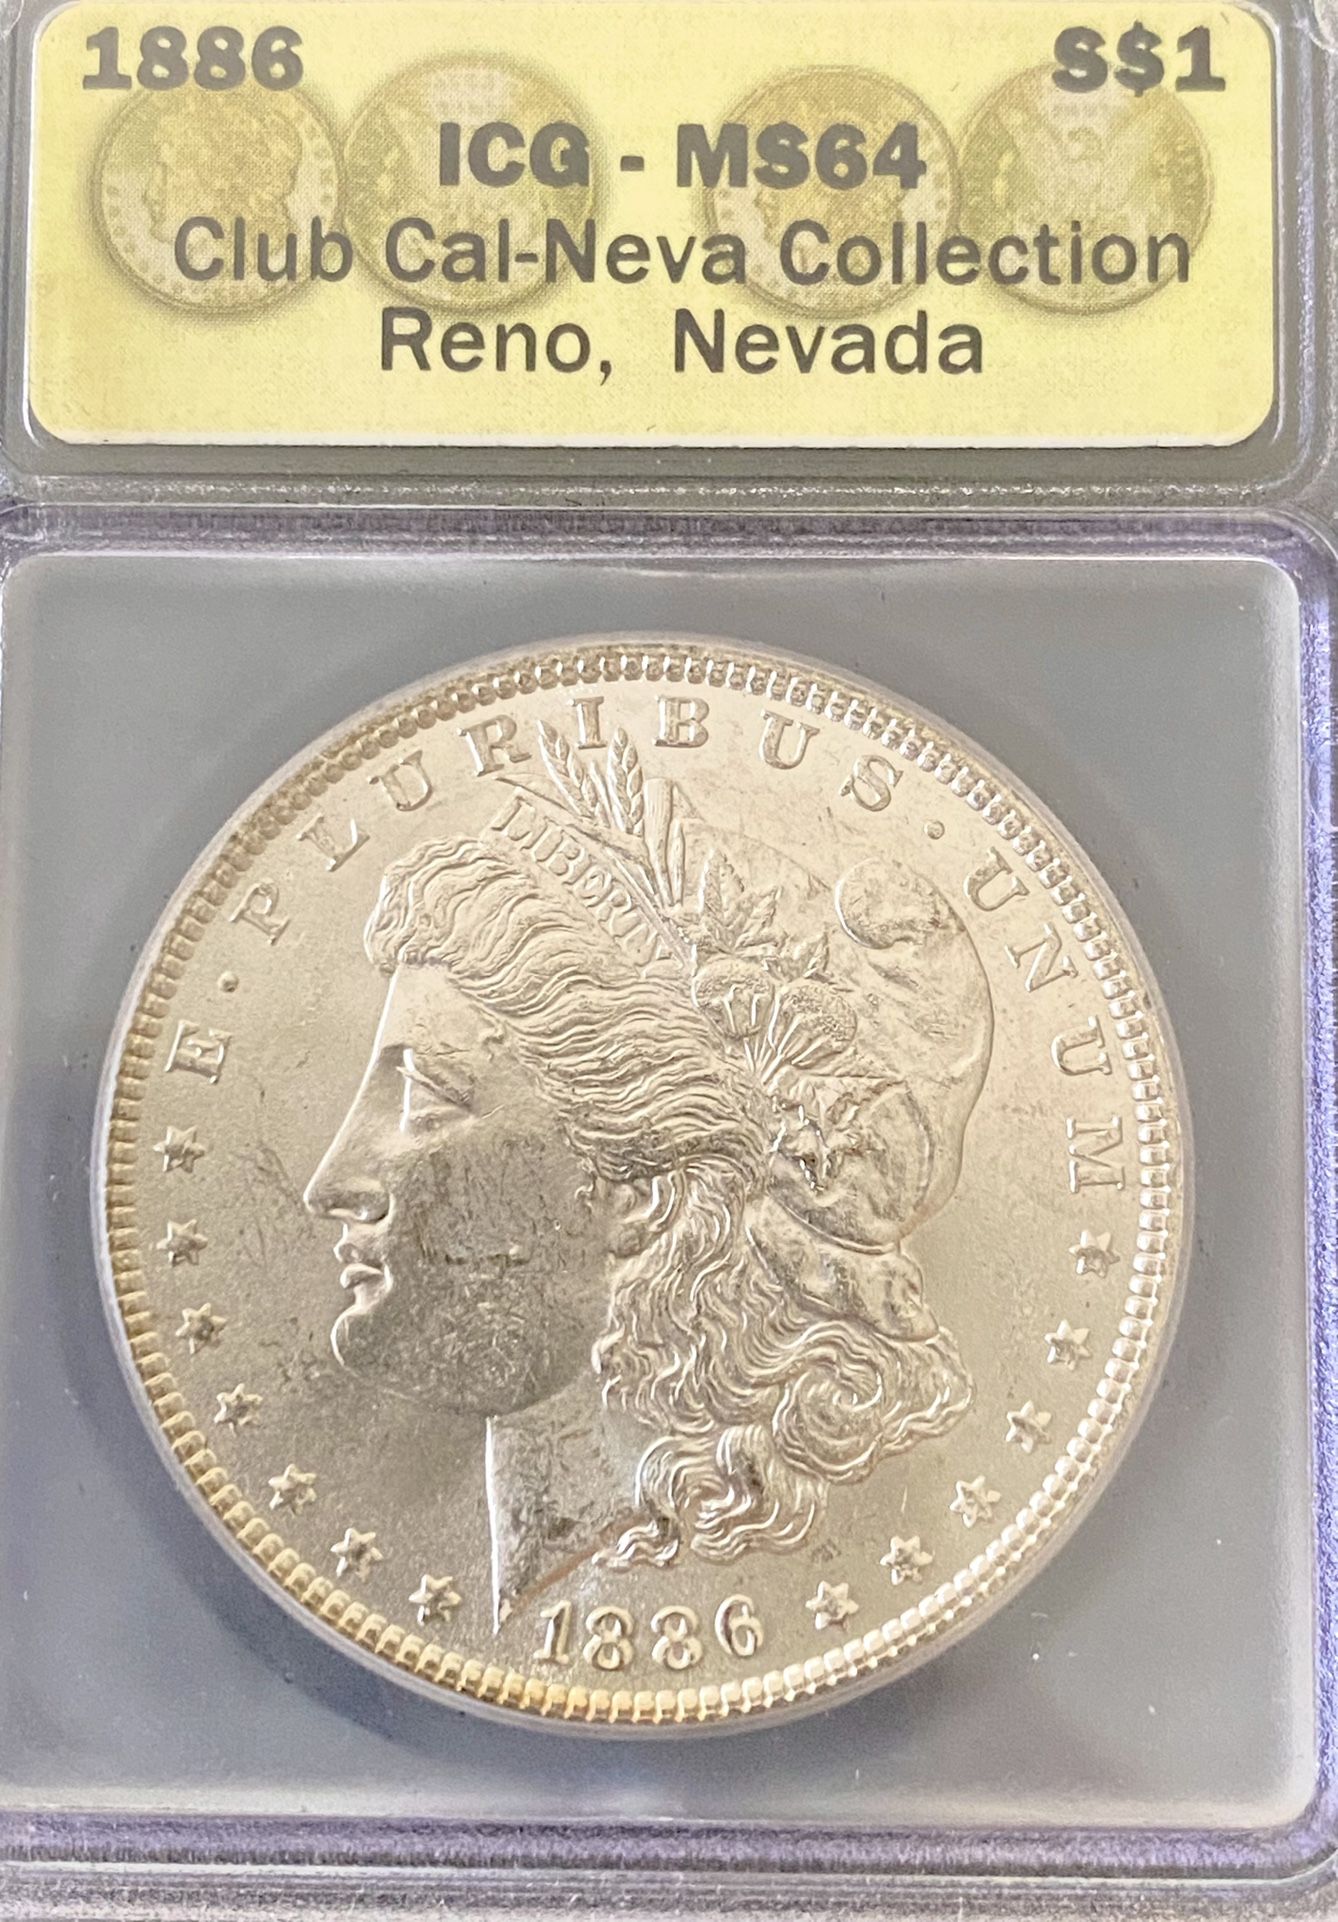  1886 Morgan Silver Dollar. ICG MS64 - Club Cal-Neva Collection pedigree 